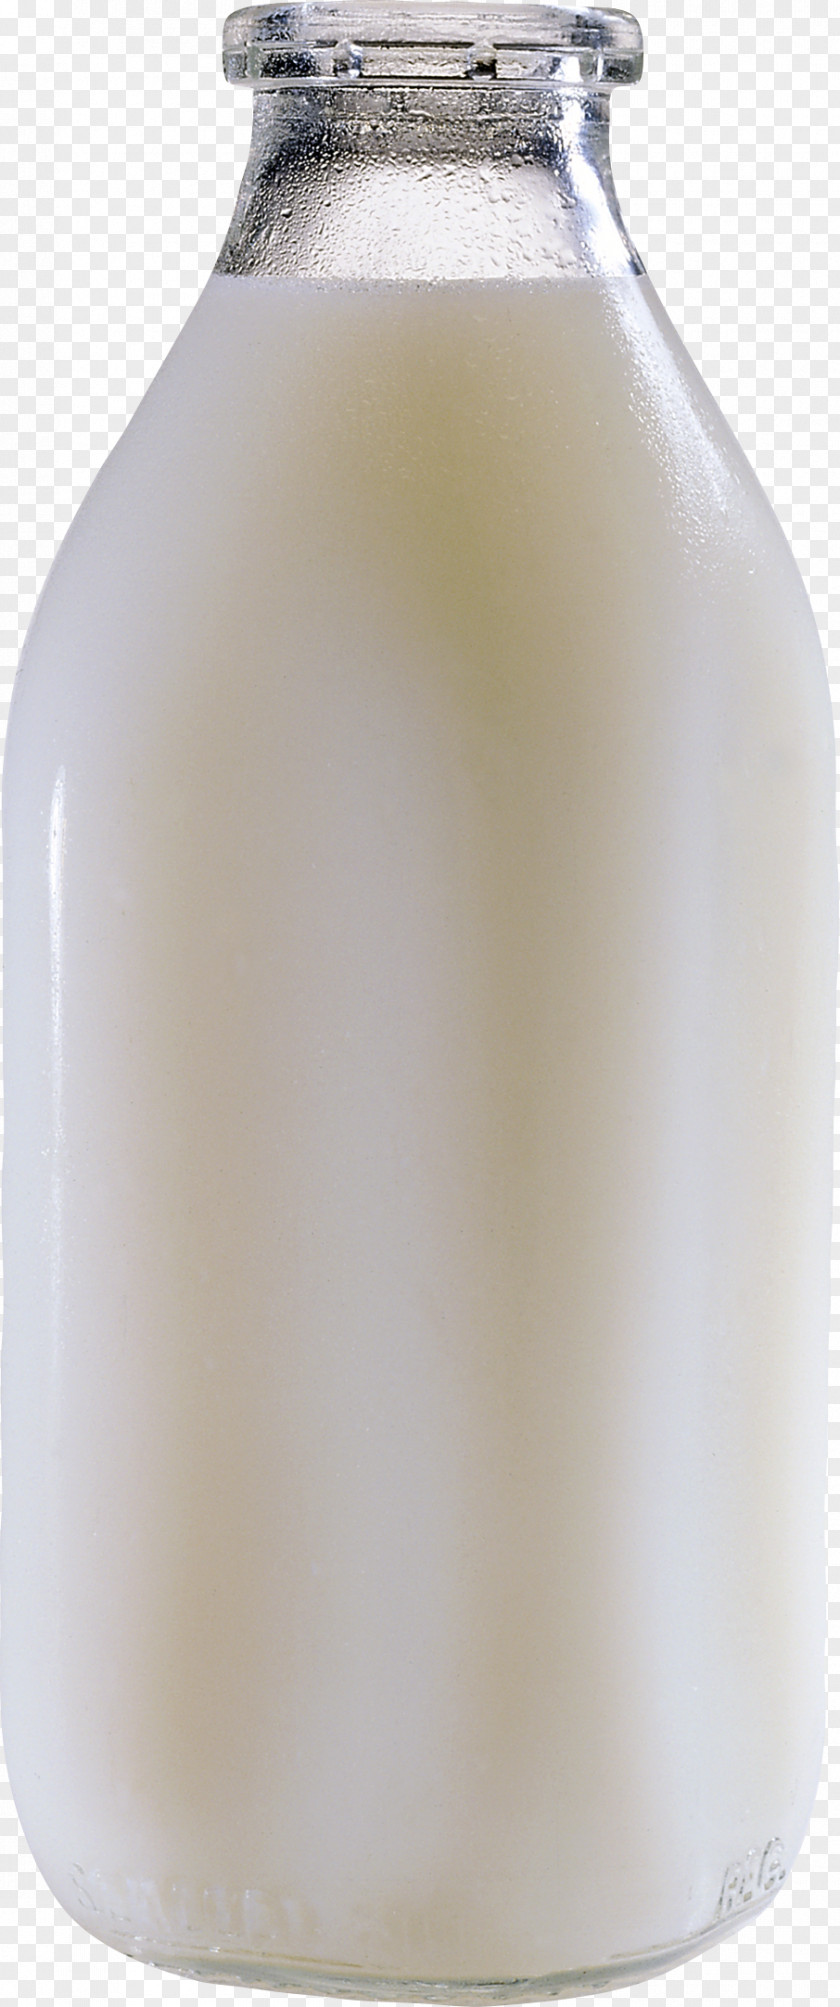 Milkjughd Milk Bottle PNG